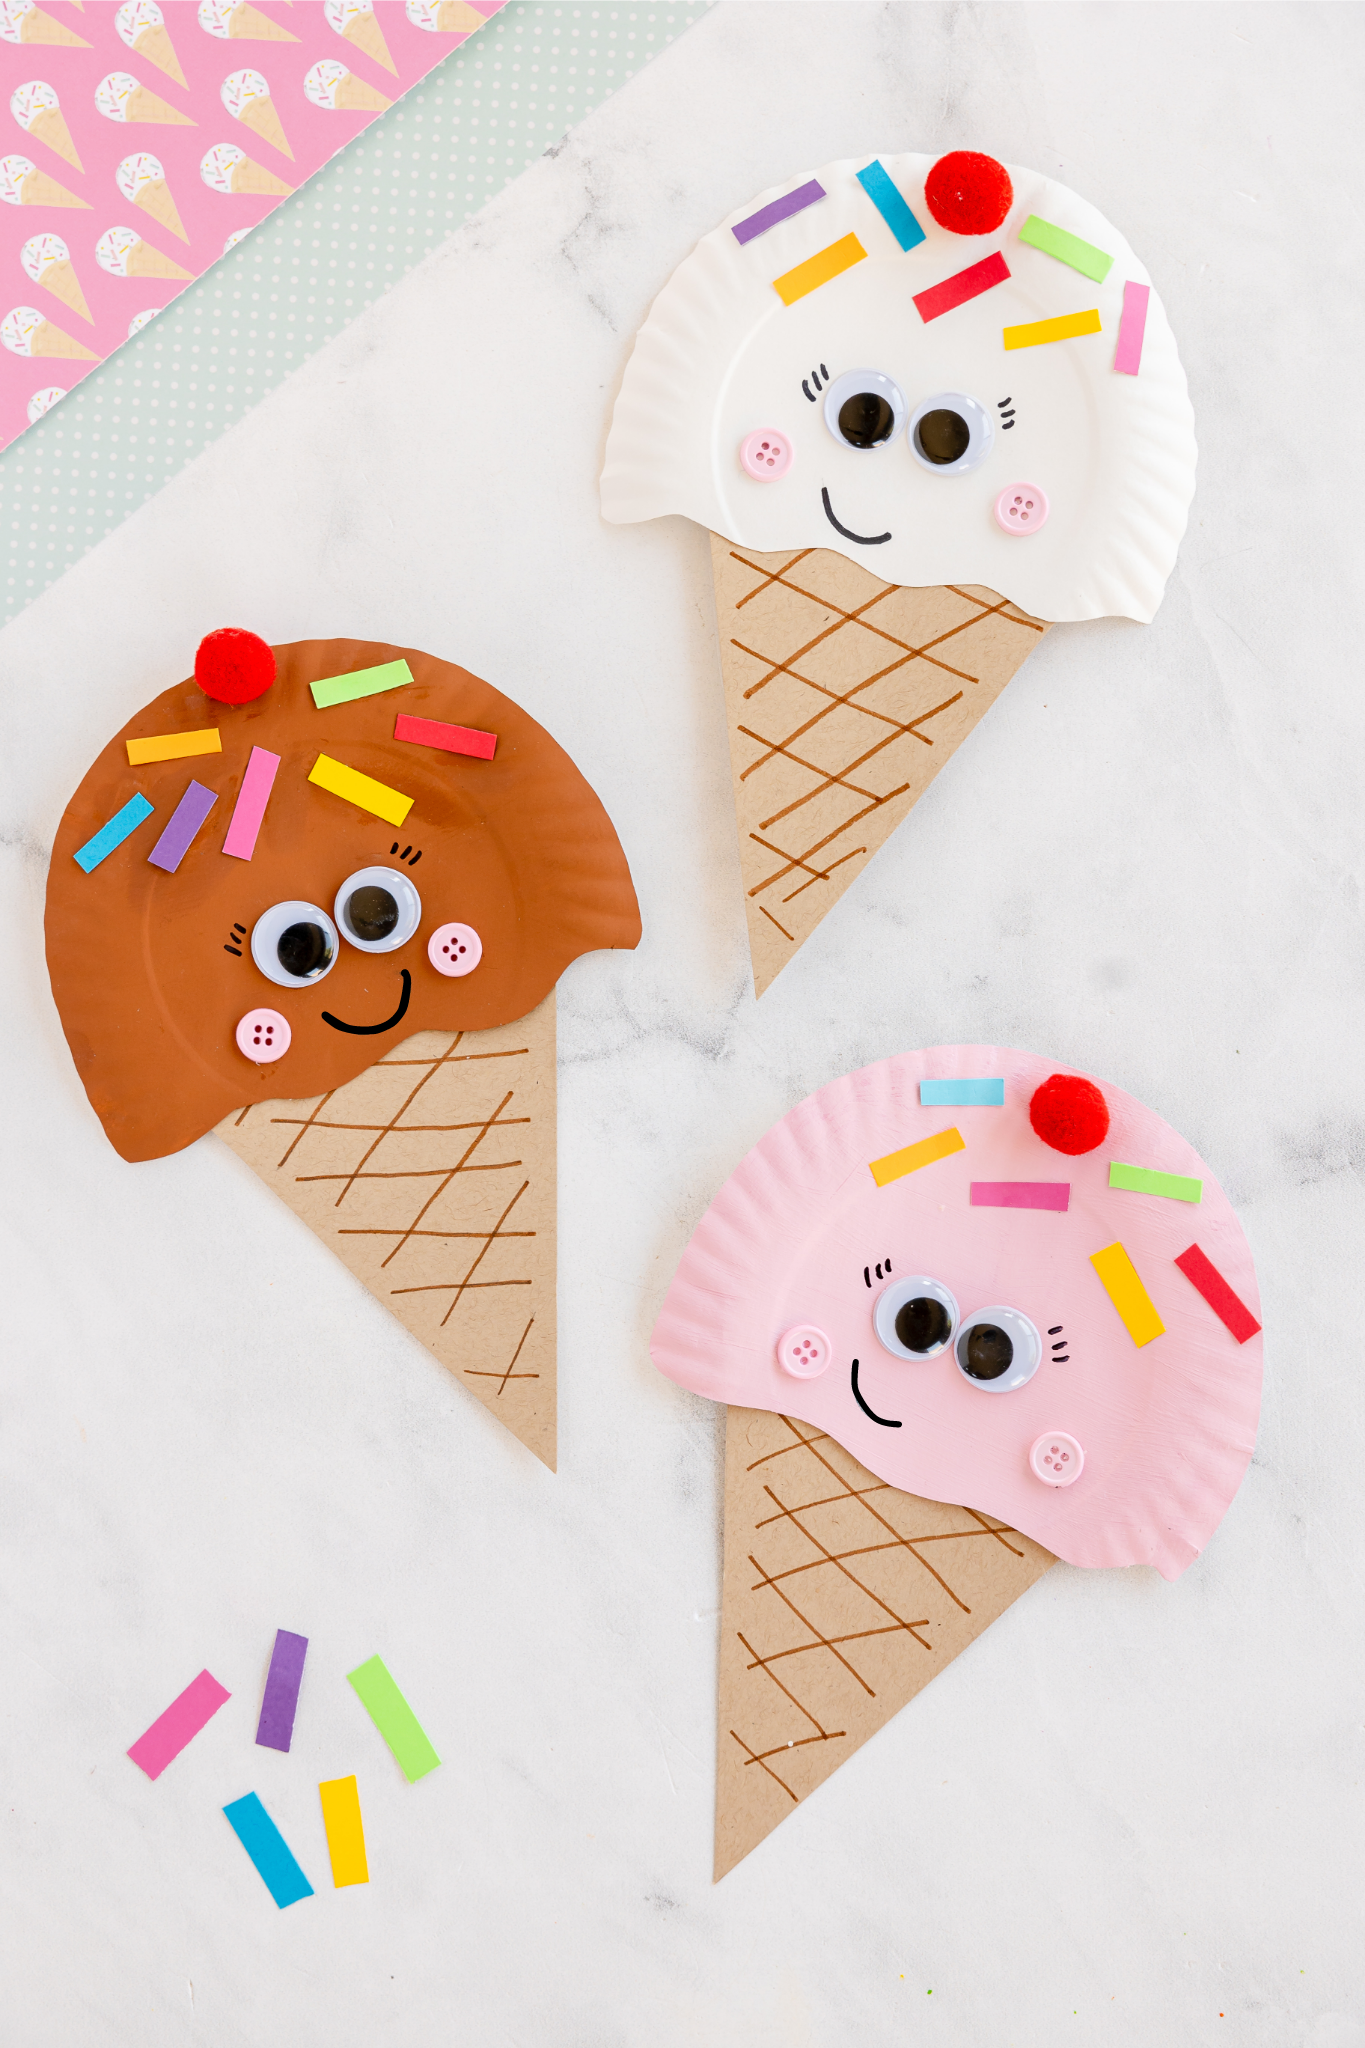 Paper Plate ice Cream cone craft with white plate, pink painted plate and brown painted plate